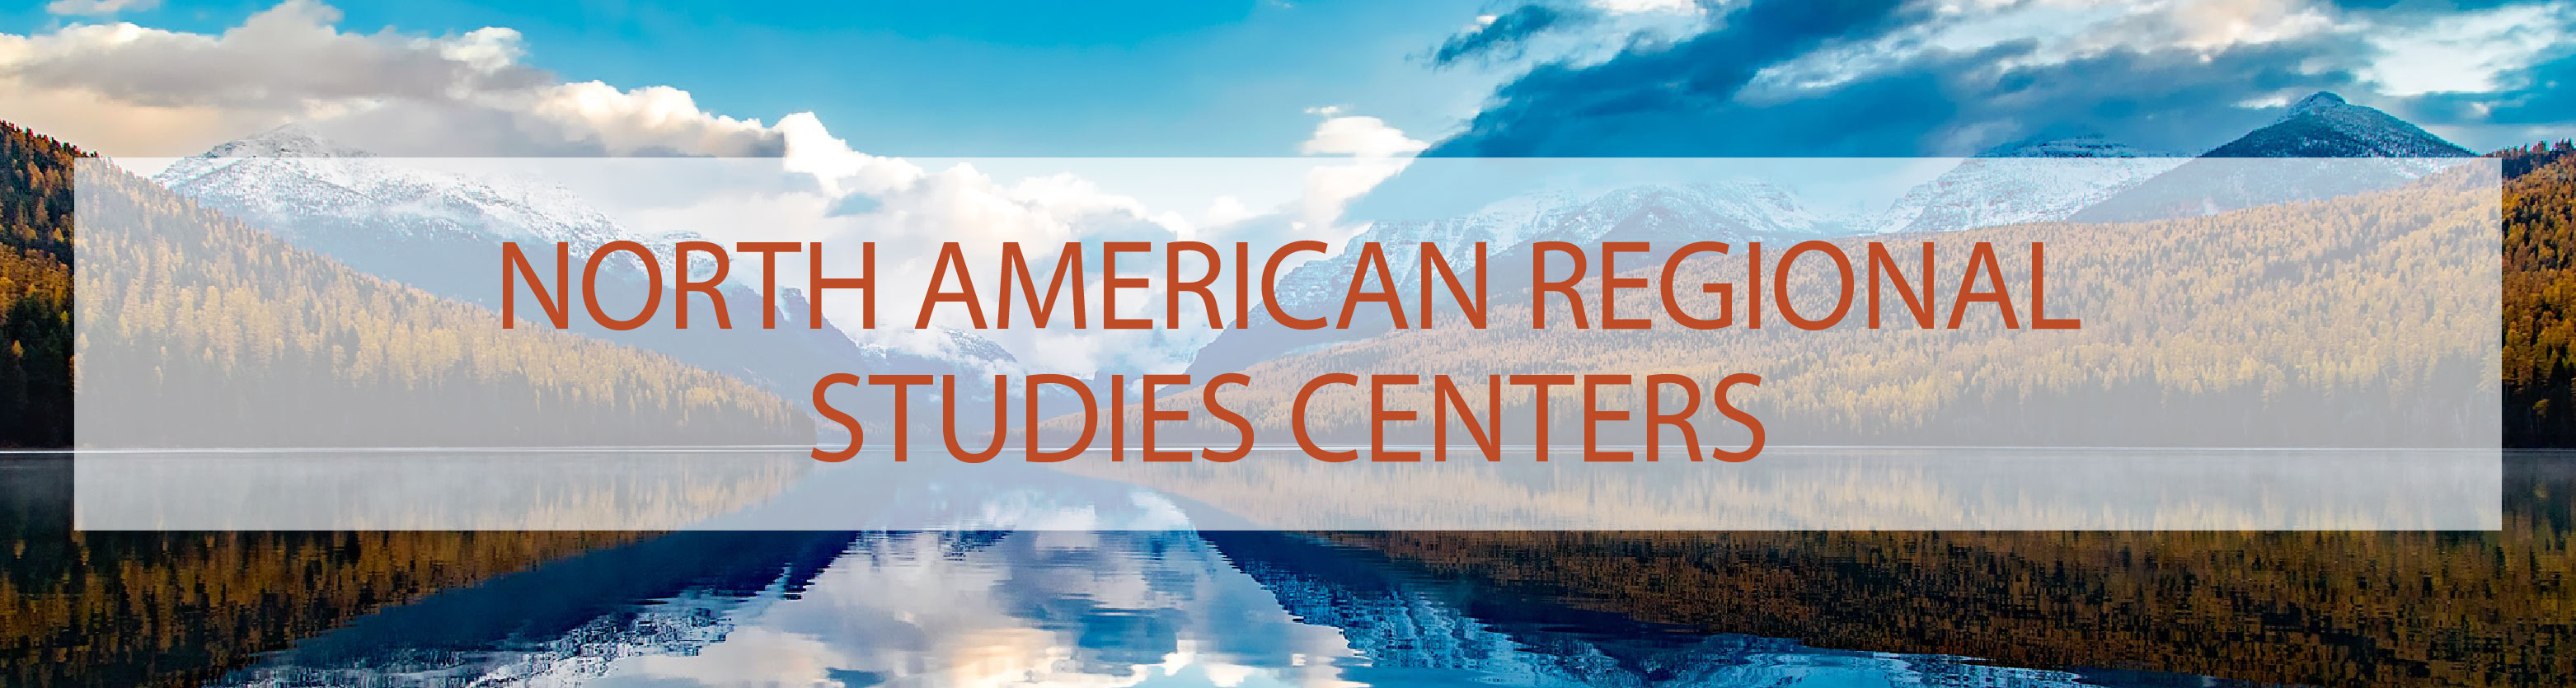 North American Regional Studies Centers